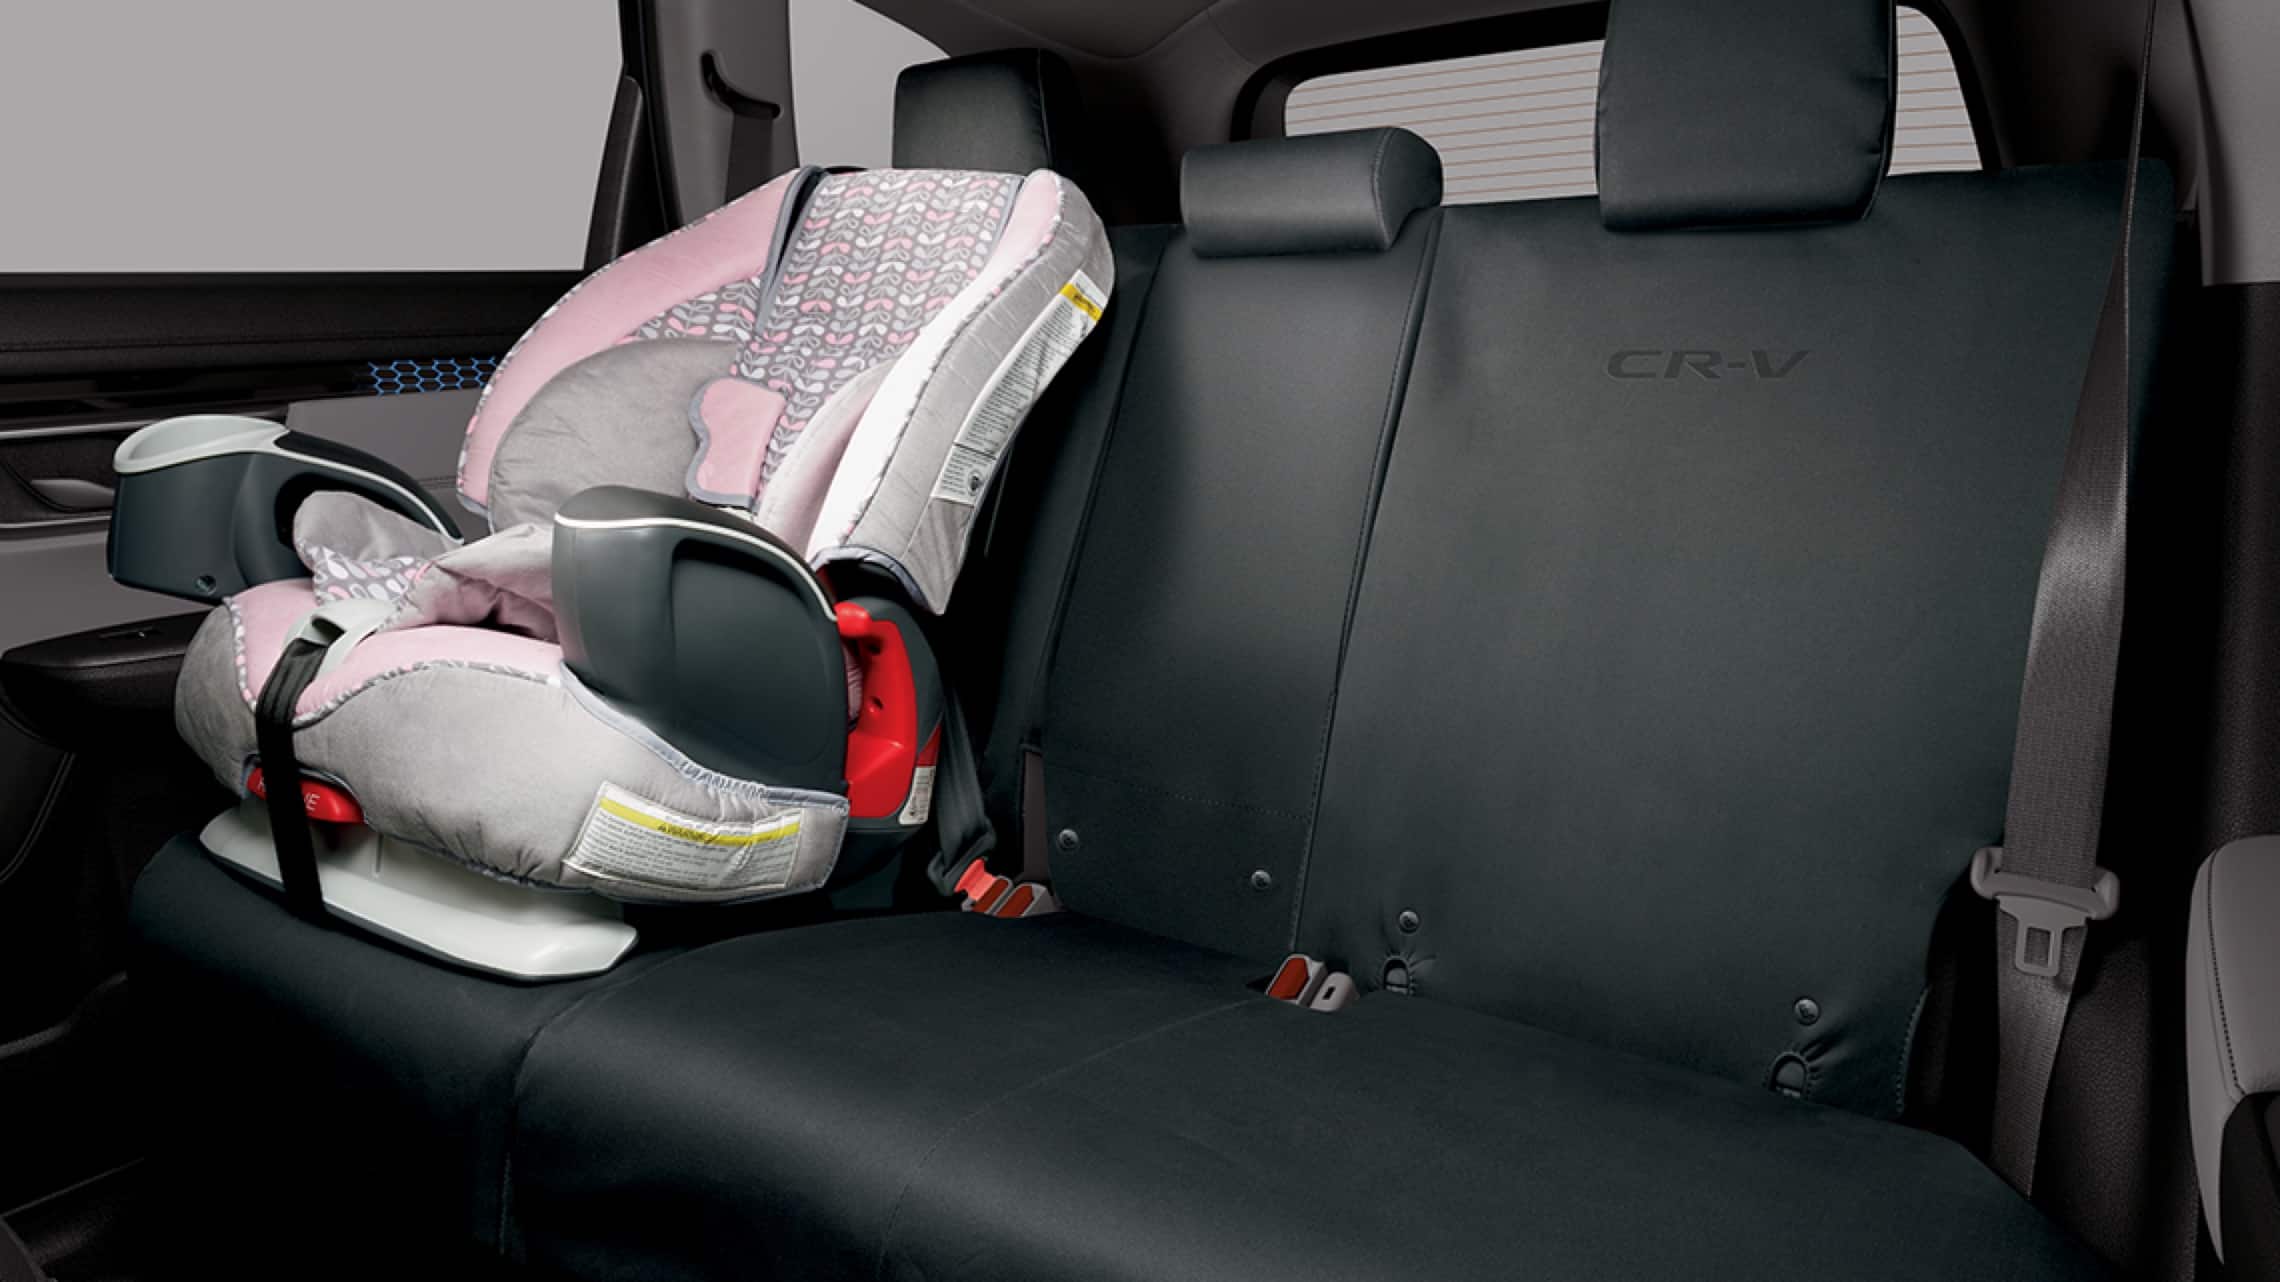 2019 Honda CR-V interior with Honda Genuine Accessory rear seat covers.